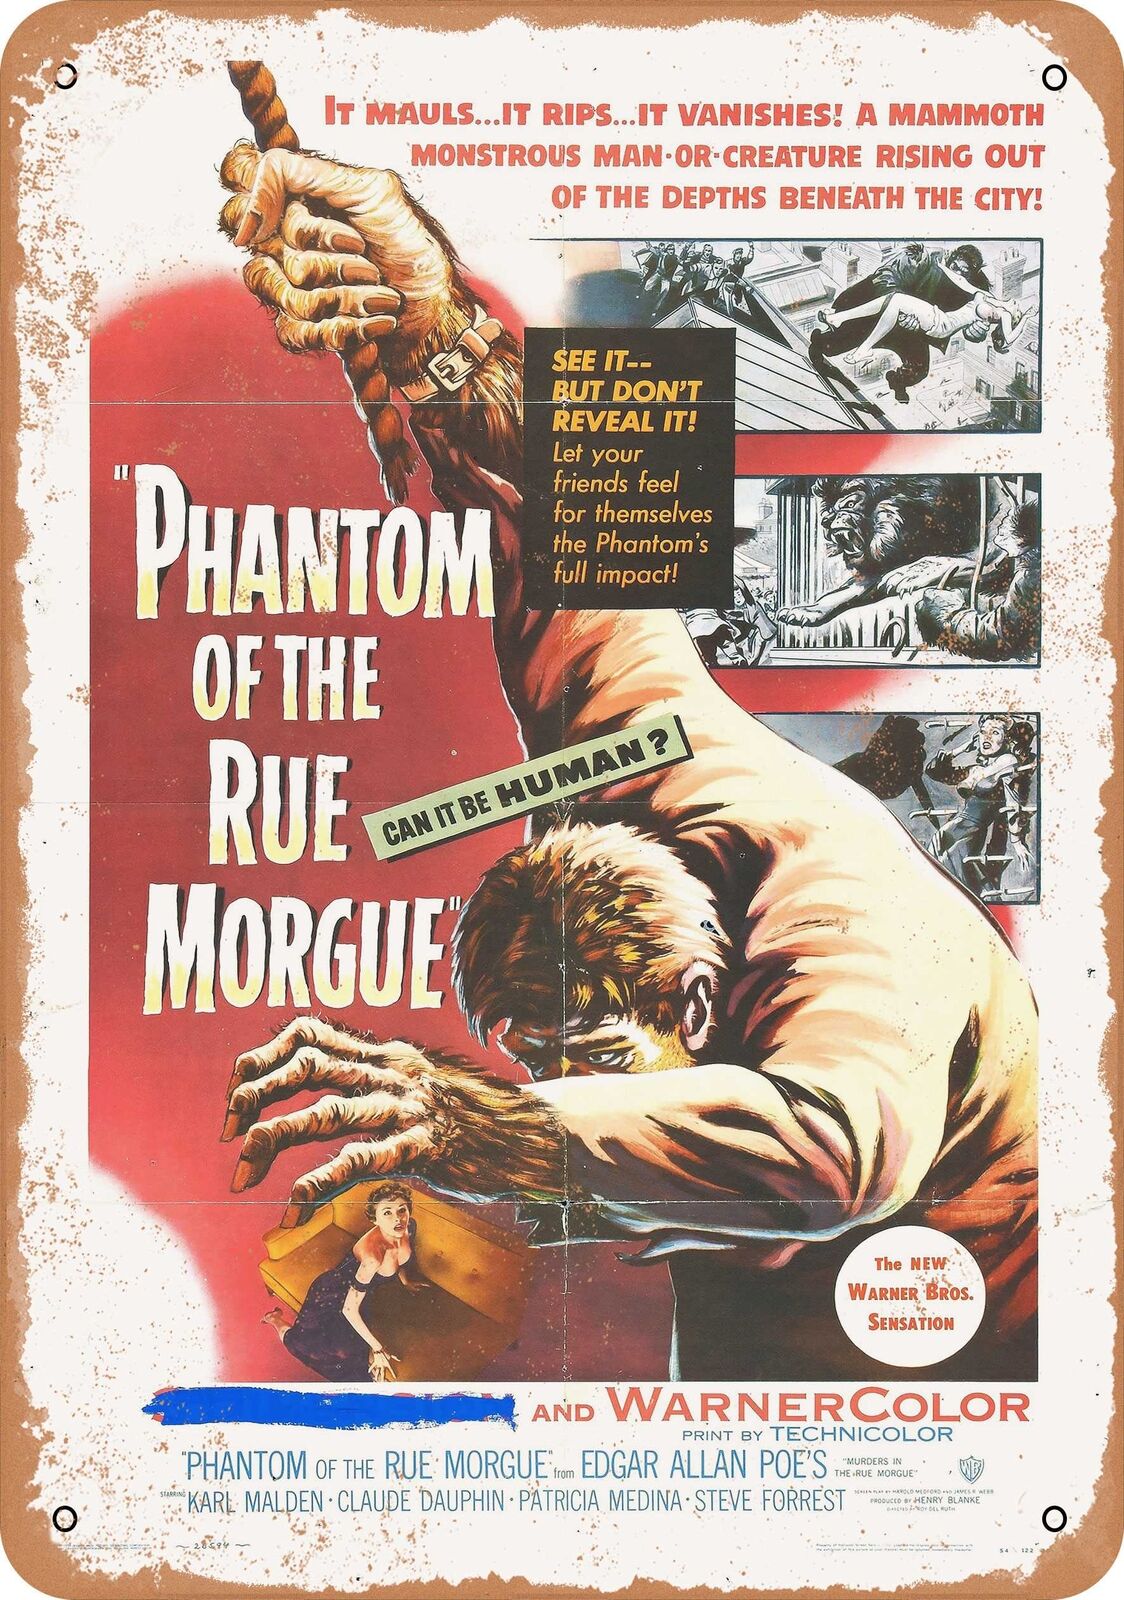 Metal Sign - Phantom of the Rue Morgue (1954) - Vintage Look